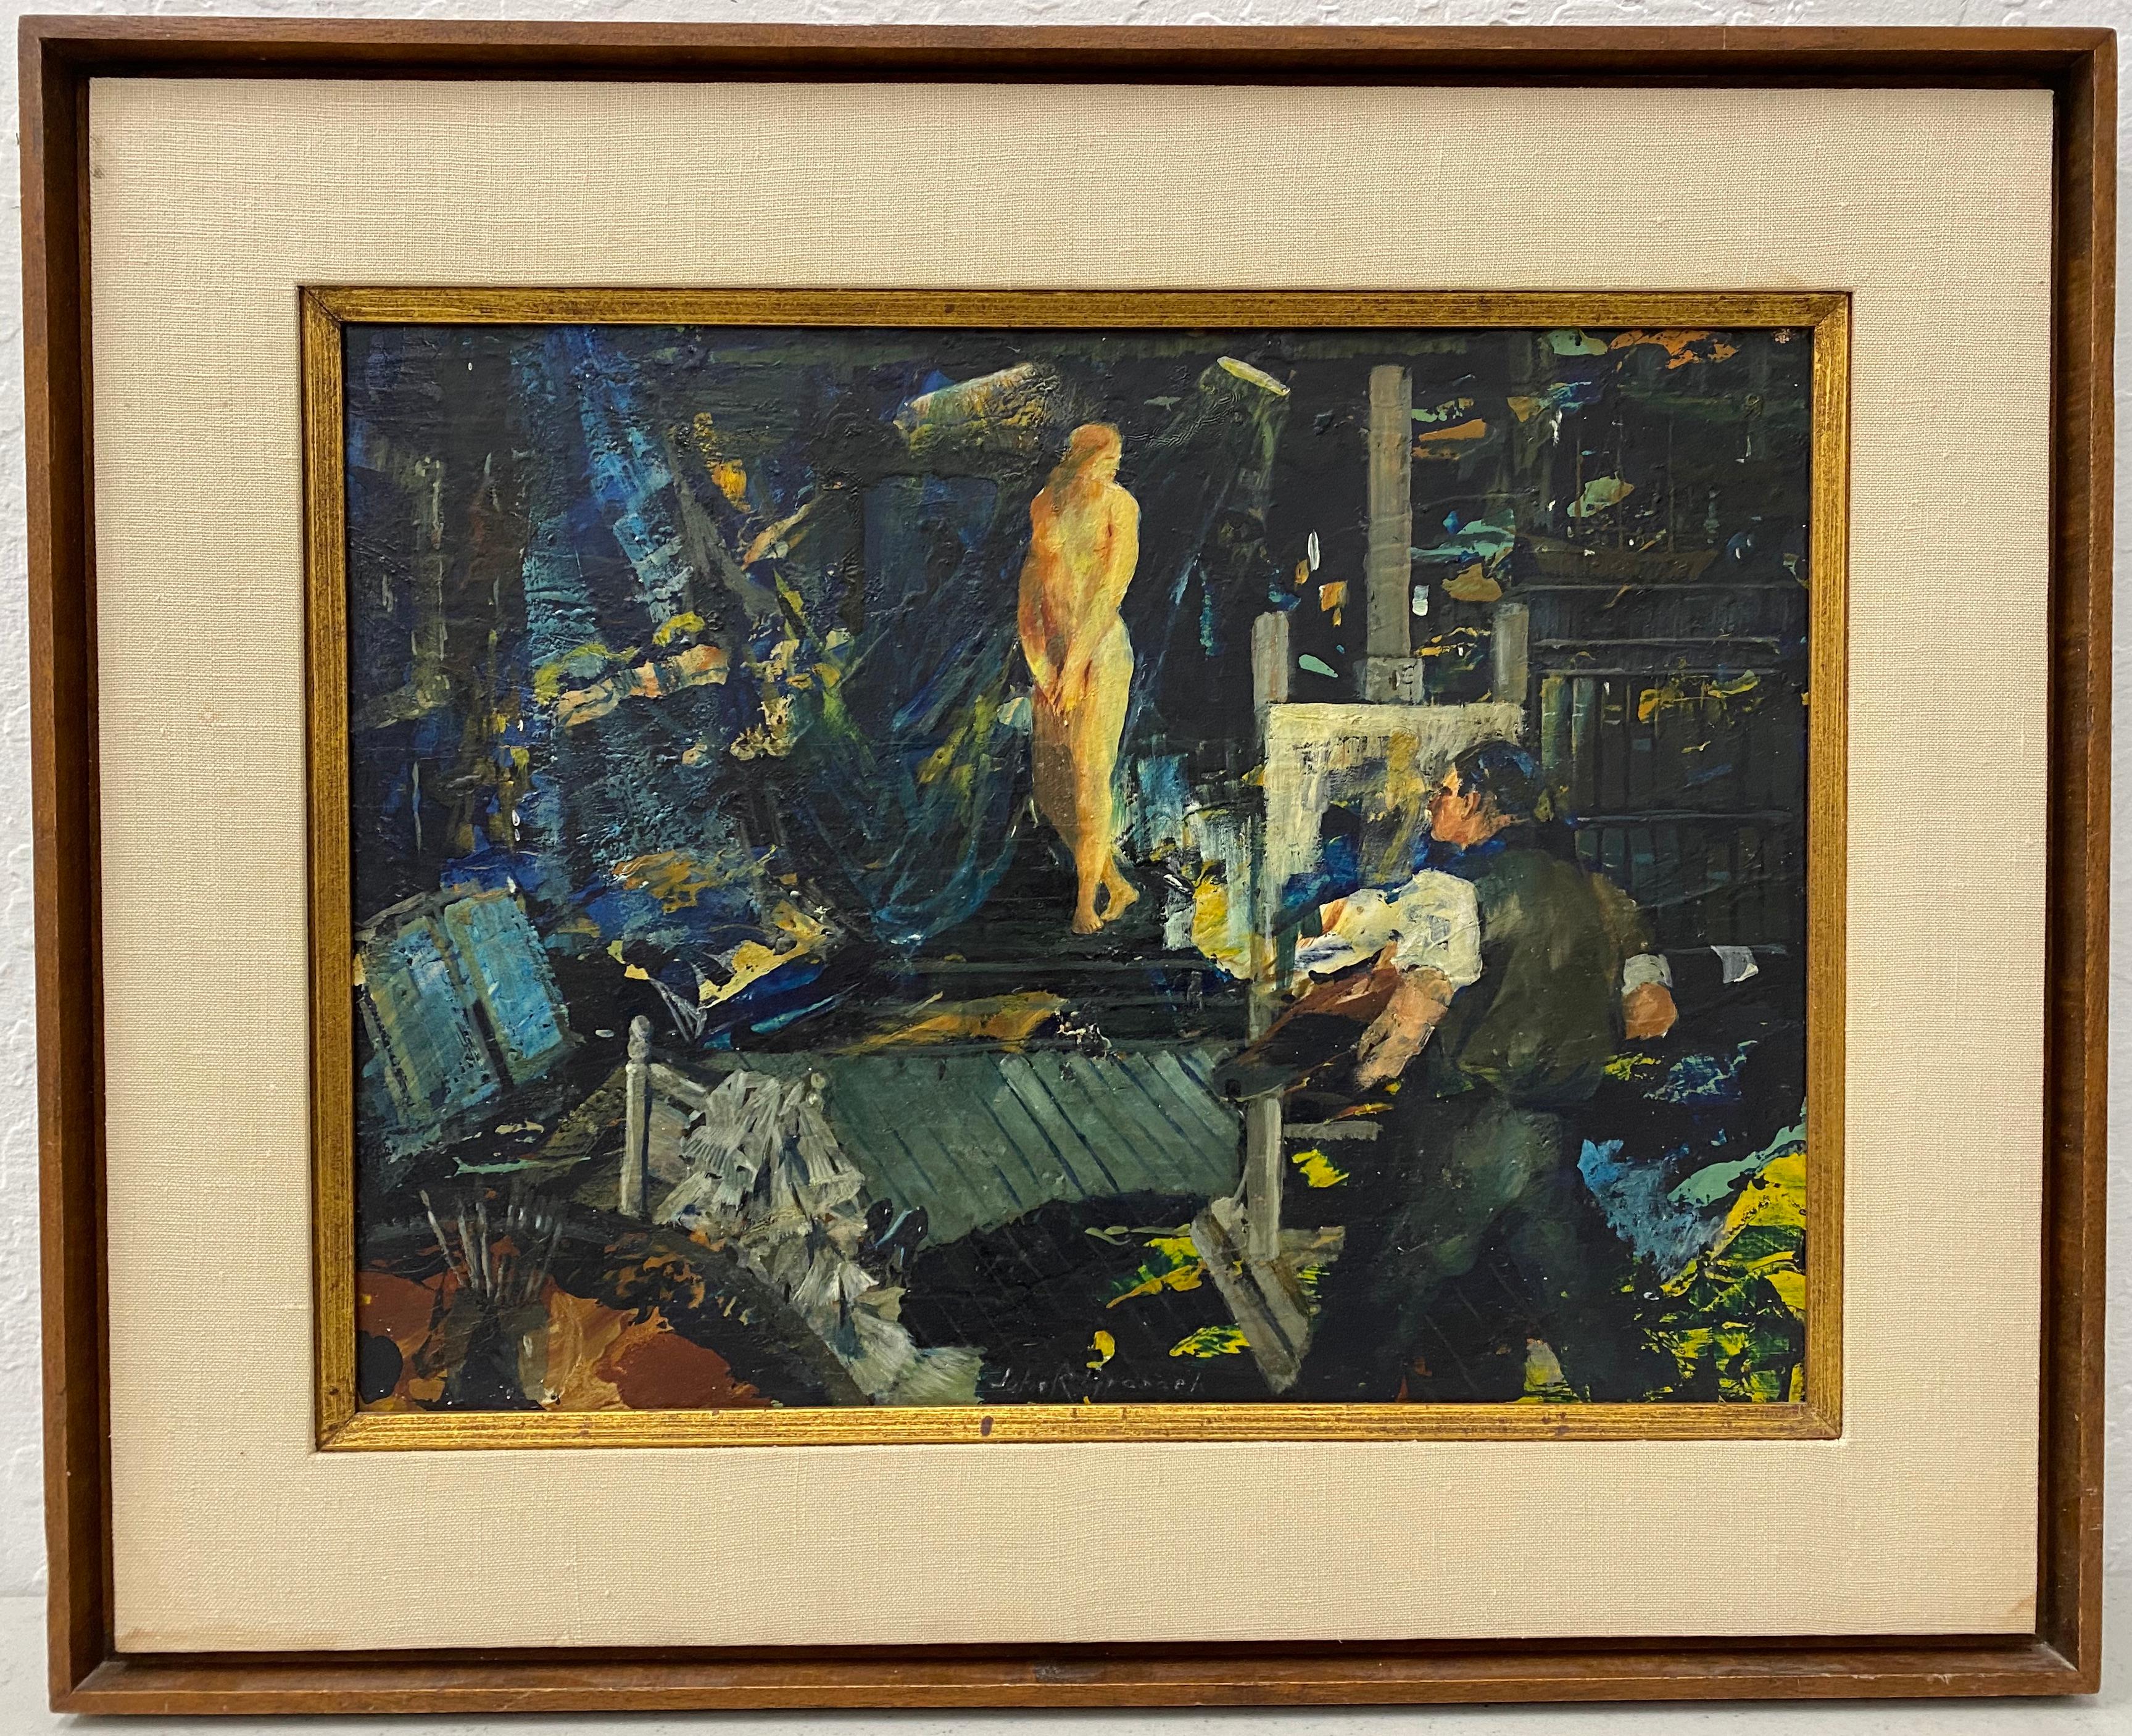 John Grabach "Artistics and Model" Peinture à l'huile originale c.C. 1950